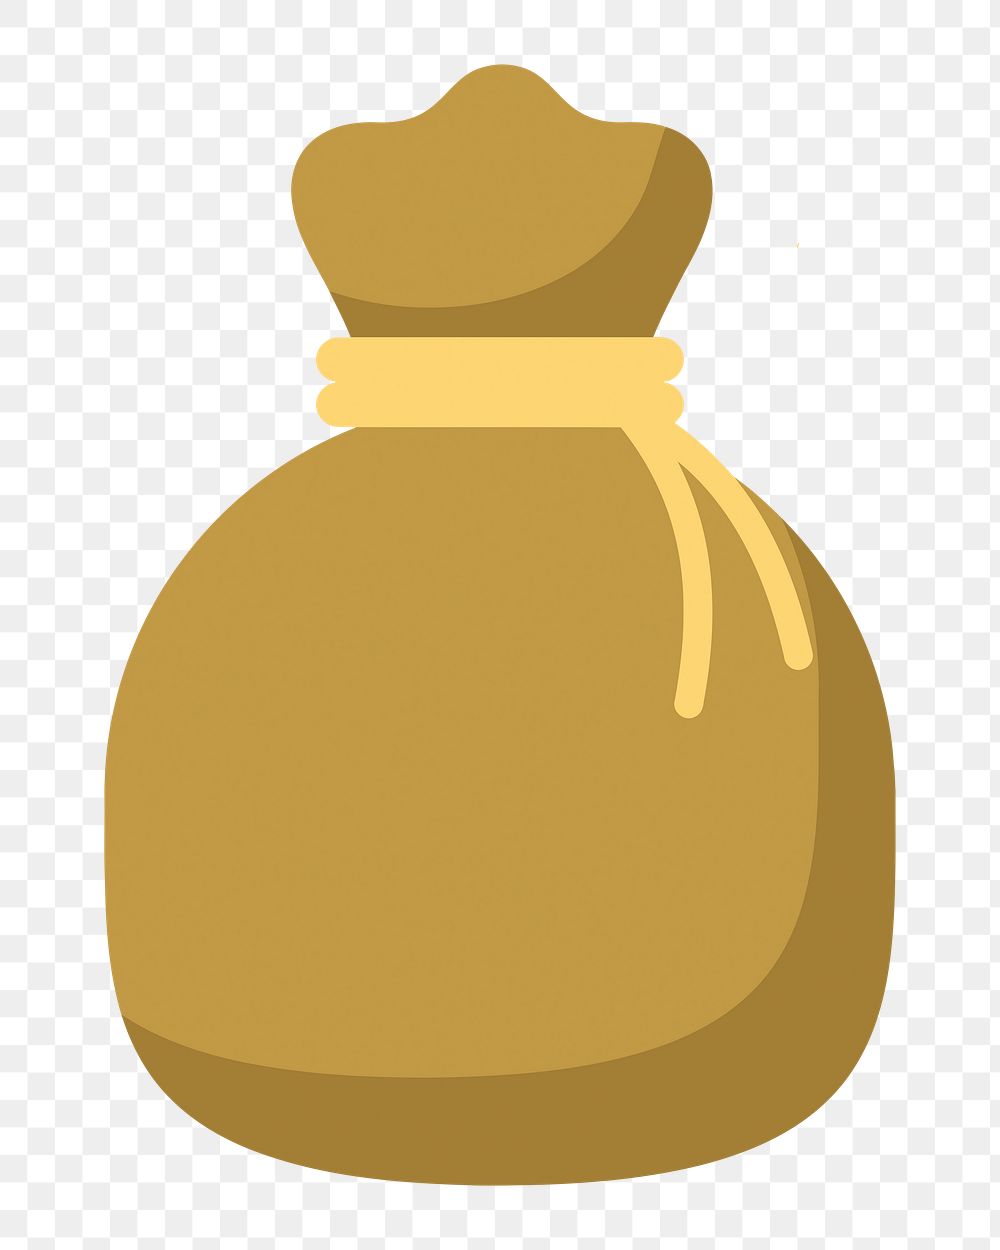 Money bag png illustration, transparent background. Free public domain CC0 image.